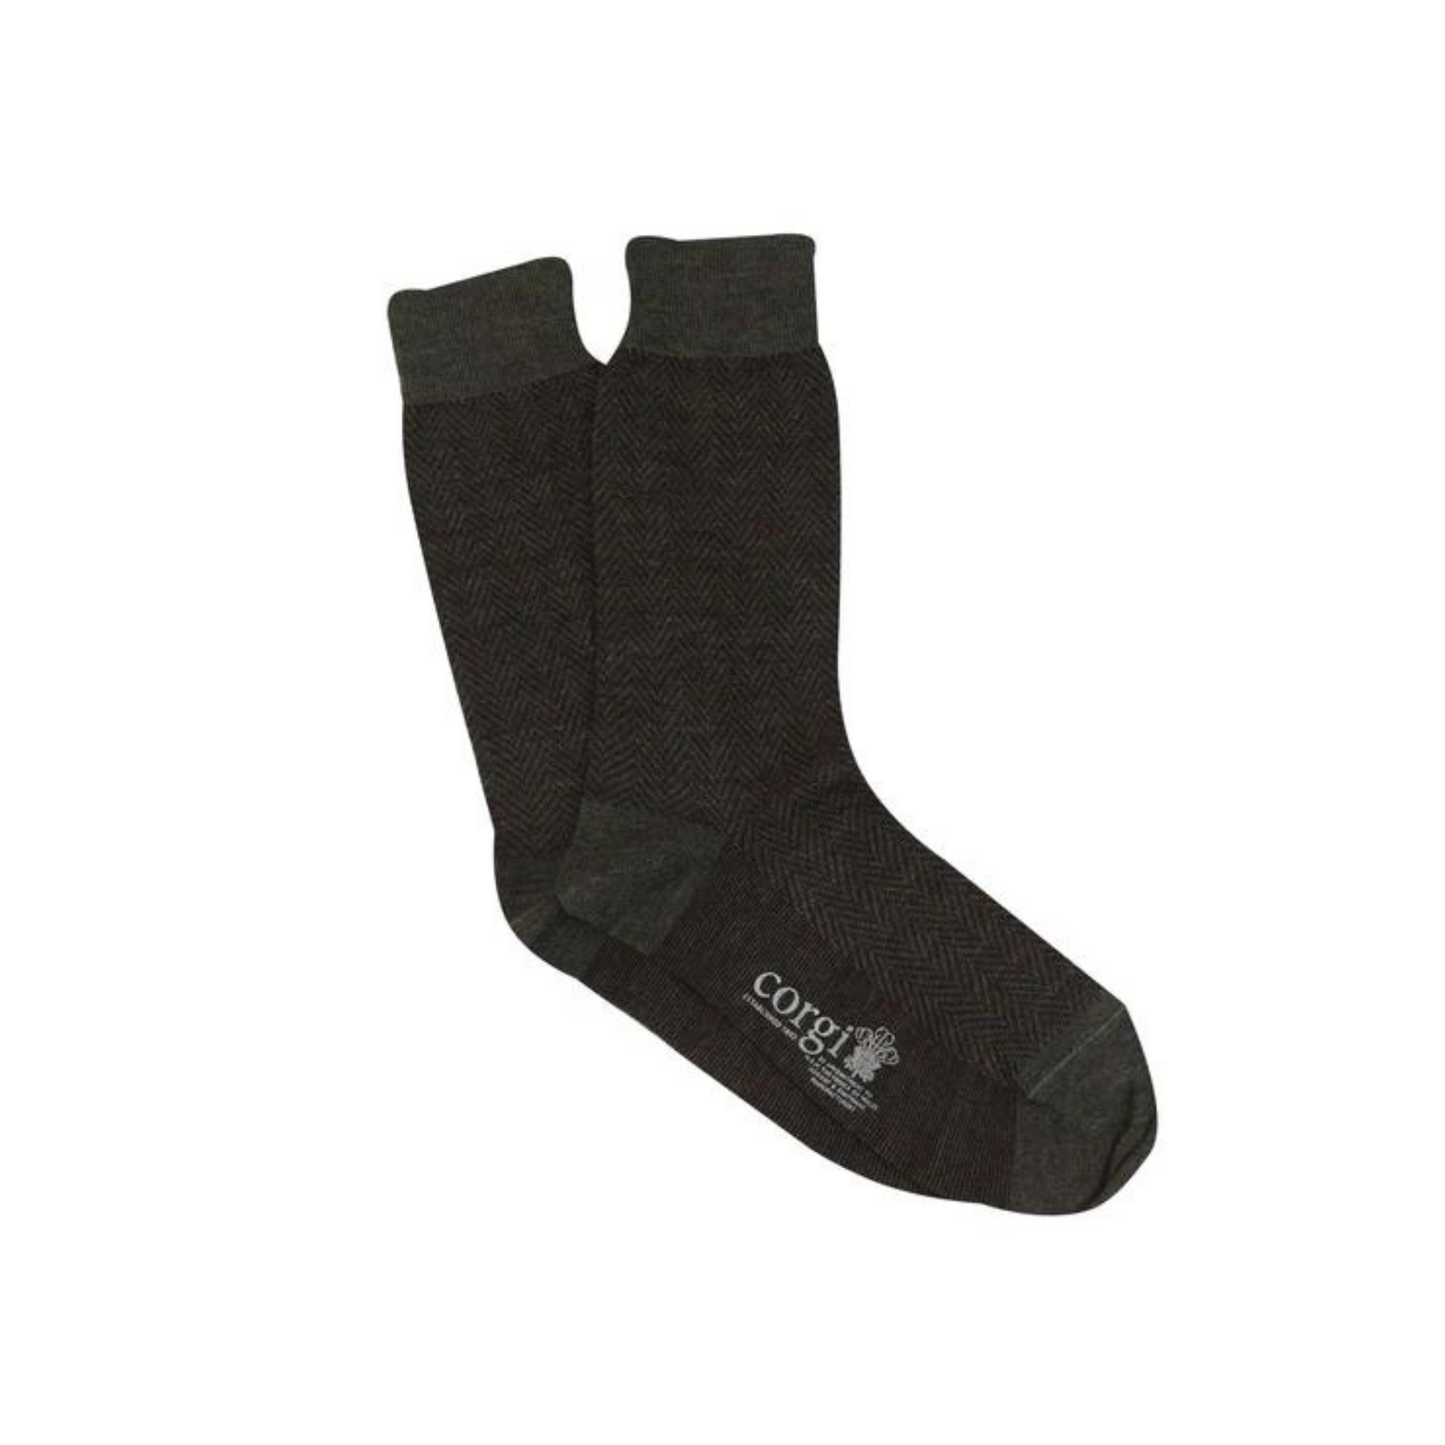 Men's Formal Herringbone Merino Wool Socks